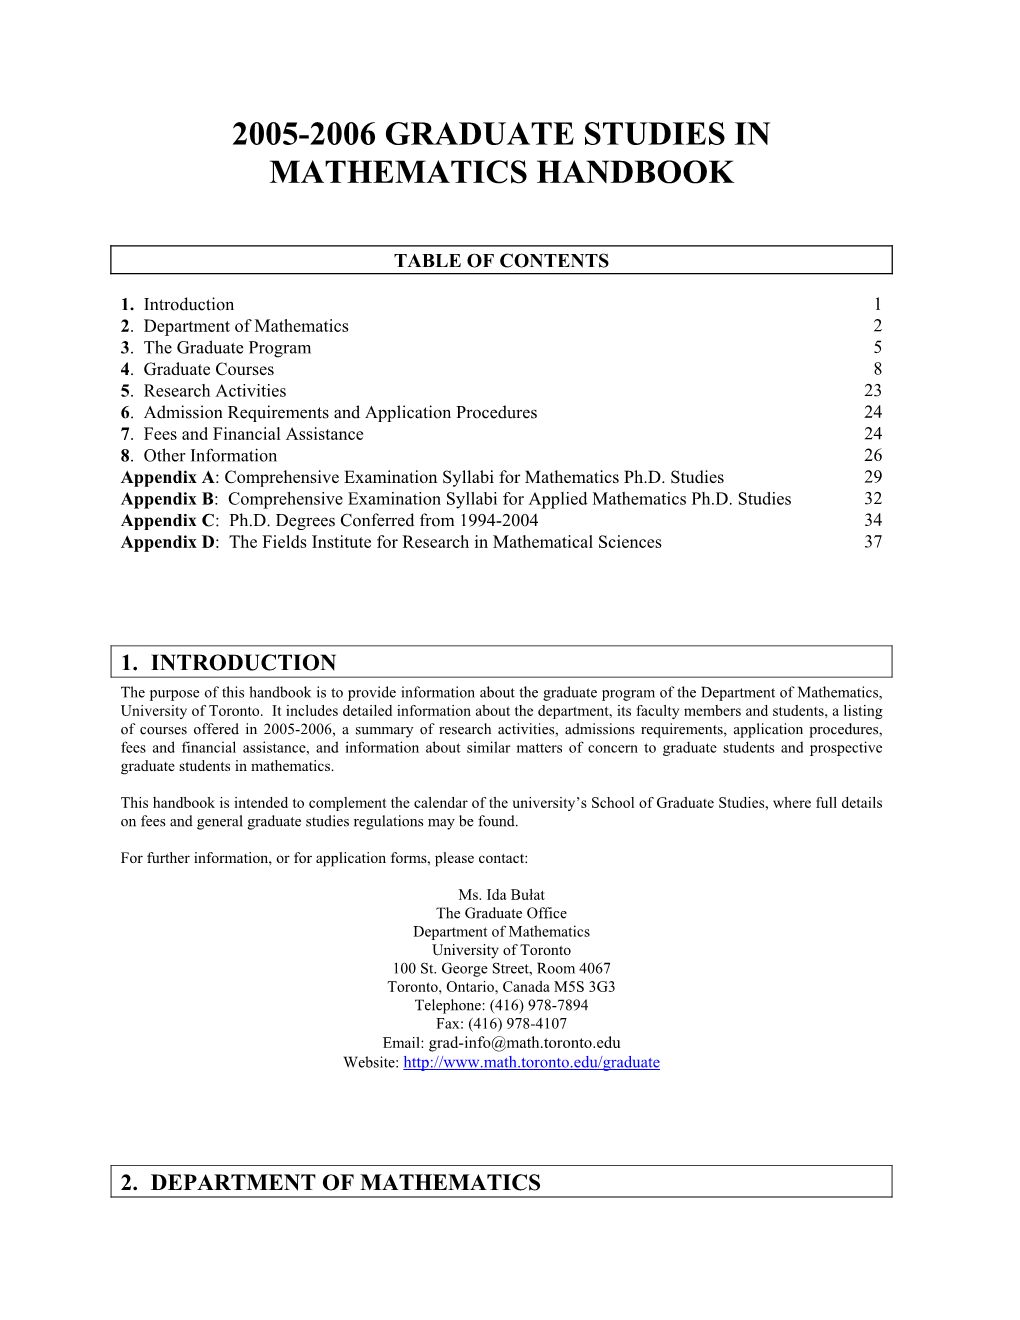 2005-2006 Graduate Studies in Mathematics Handbook